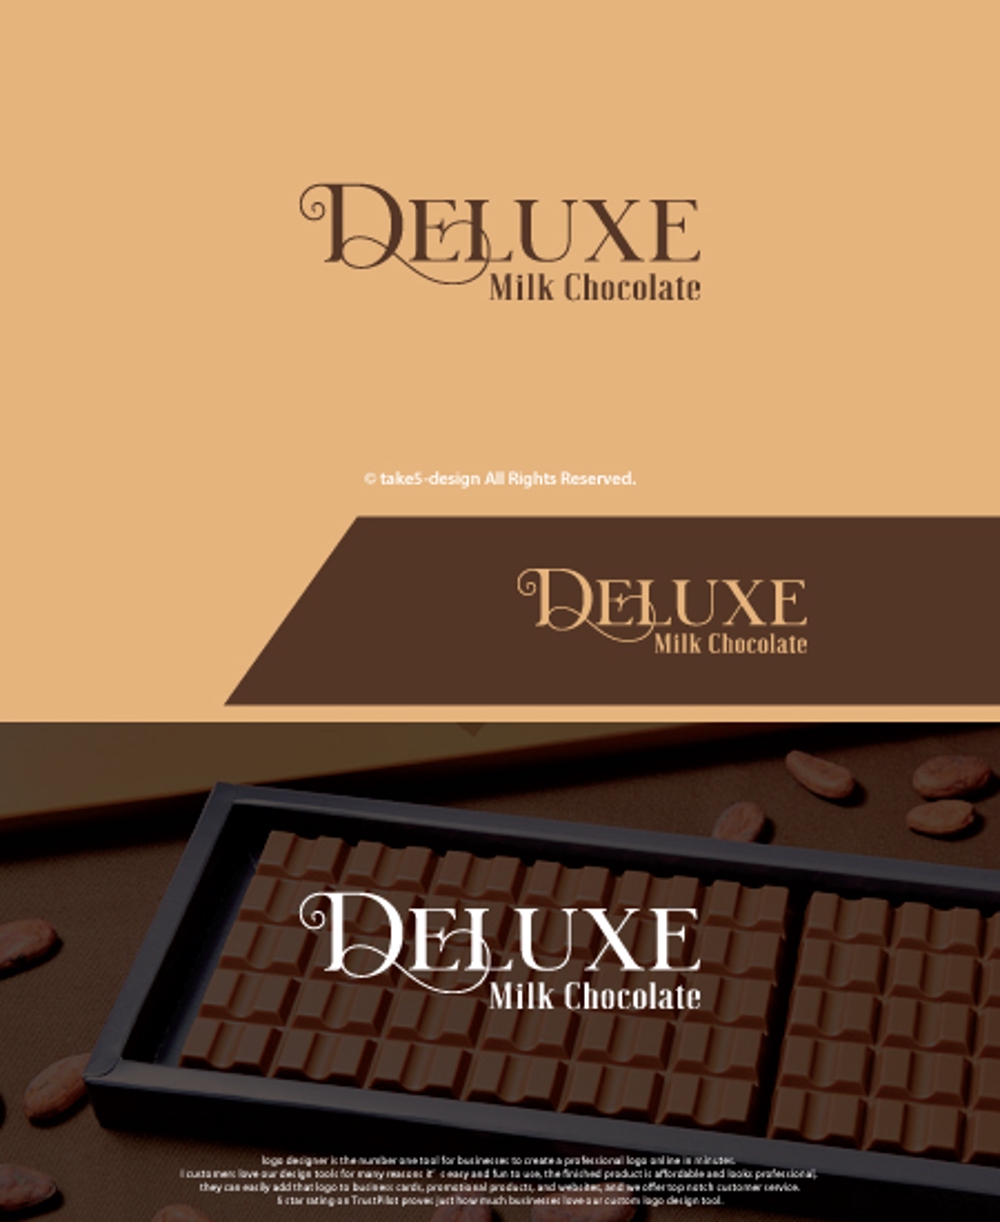 Deluxe_Milk_Chocolate_提案.jpg